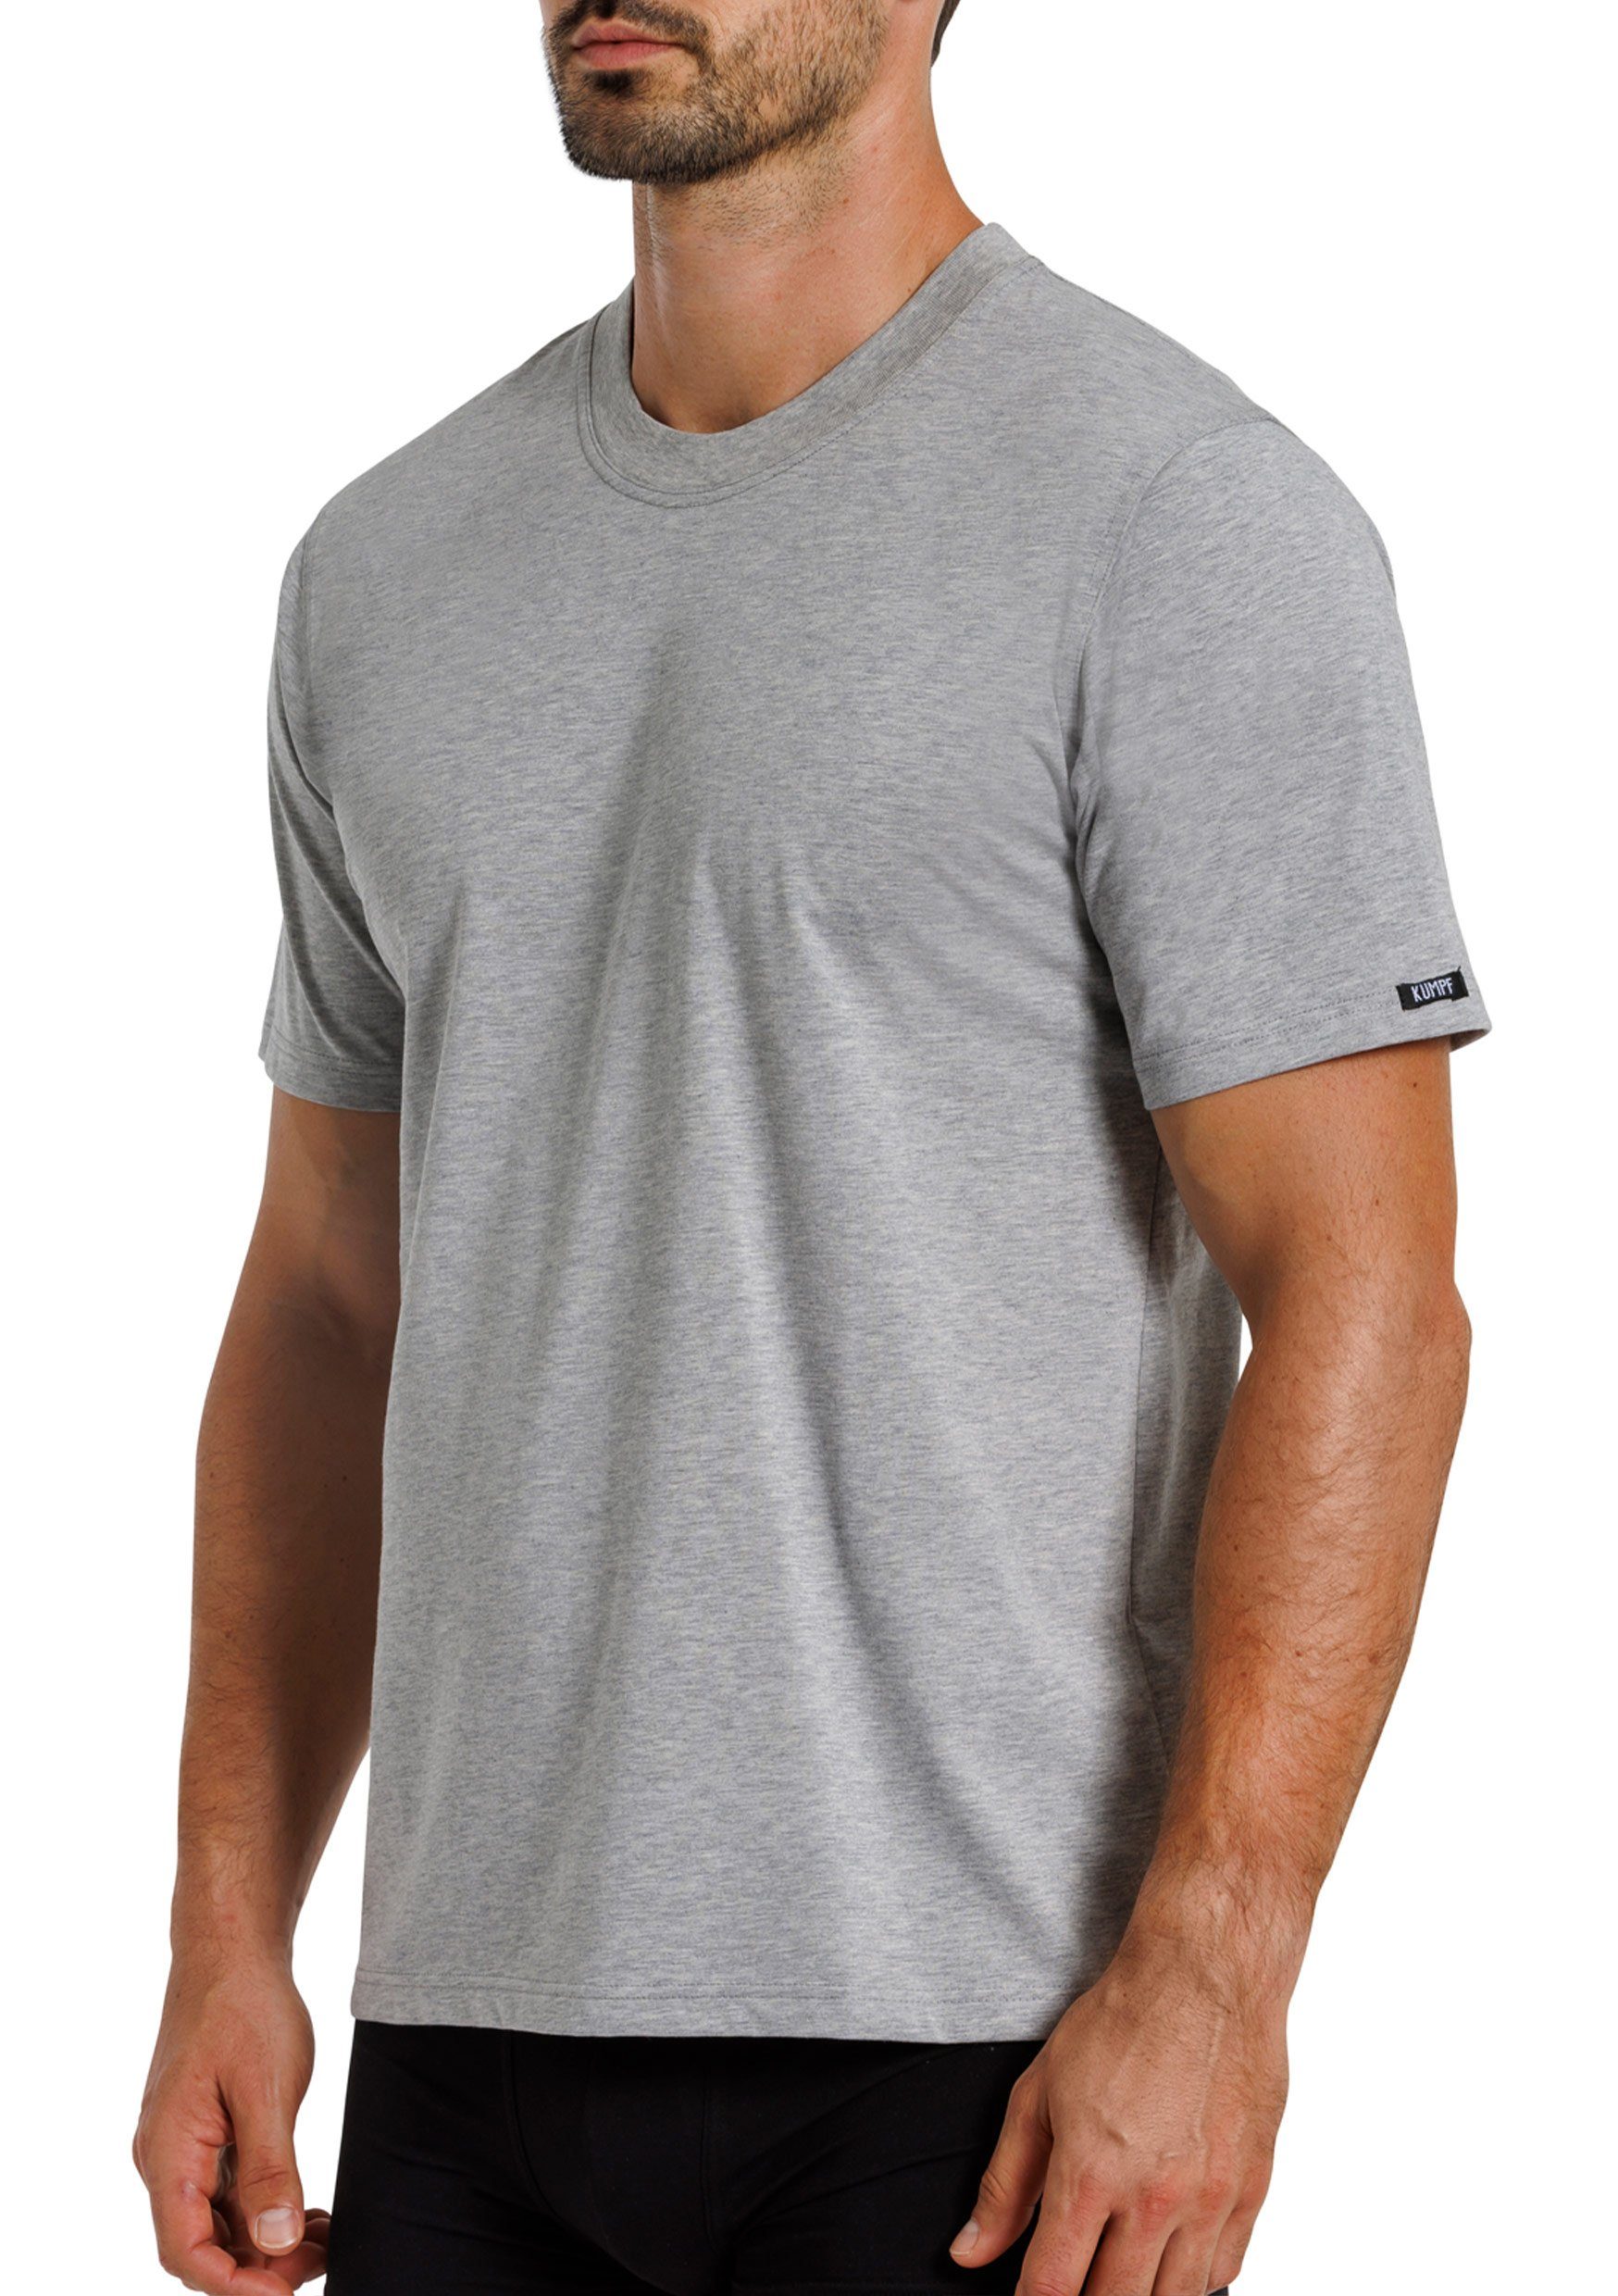 Arm 1-St) Herren T-Shirt stahlgrau-melange Unterziehshirt hohe Markenqualität KUMPF (Stück, Cotton 1/2 Bio